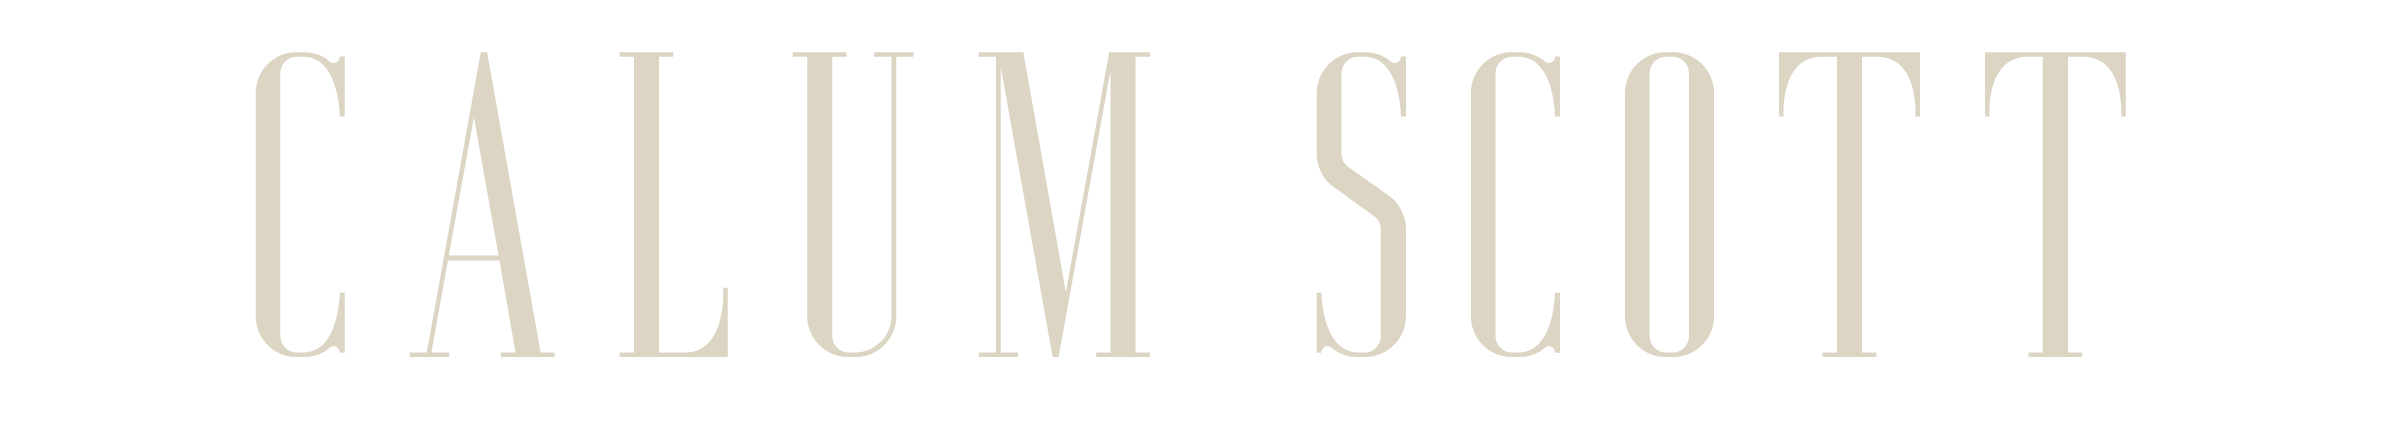 Calum Scott Logo